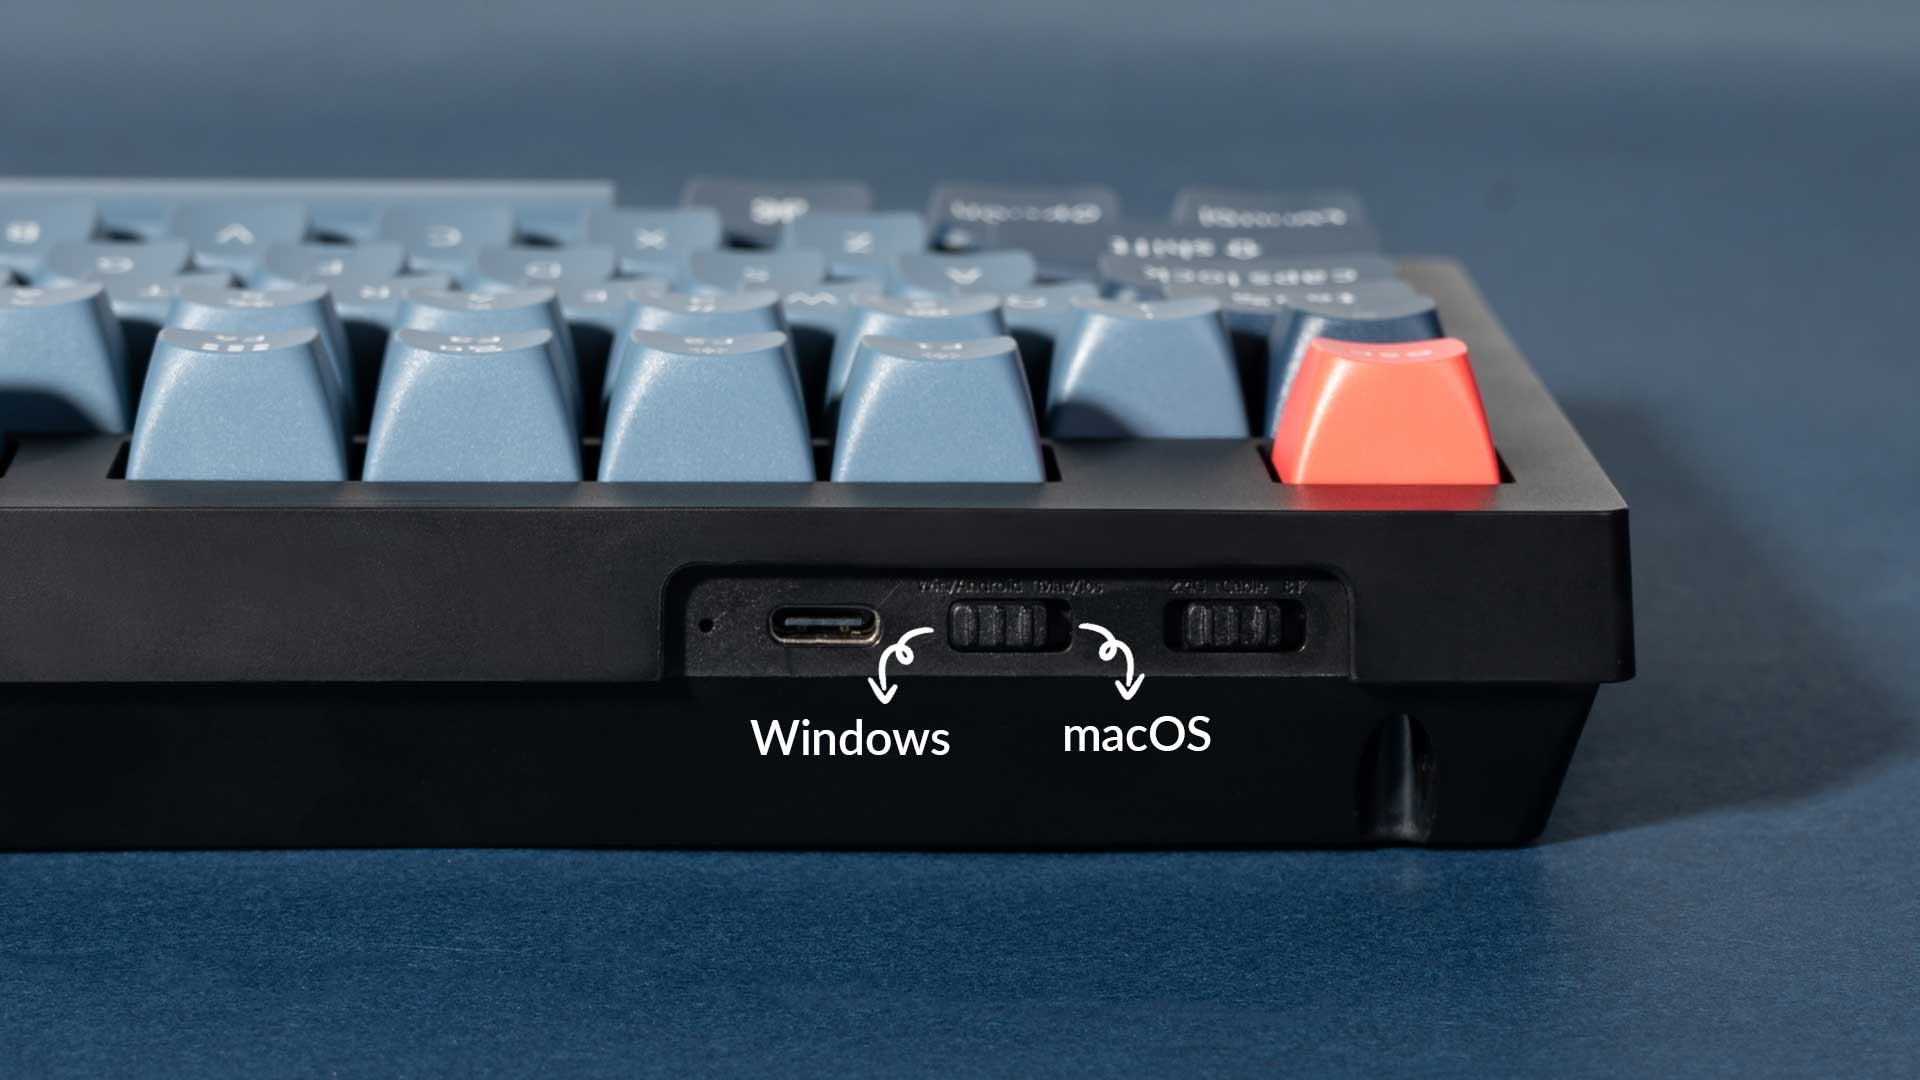 Keychron V5 Max 2.4G wireless QMK mechanical keyboard